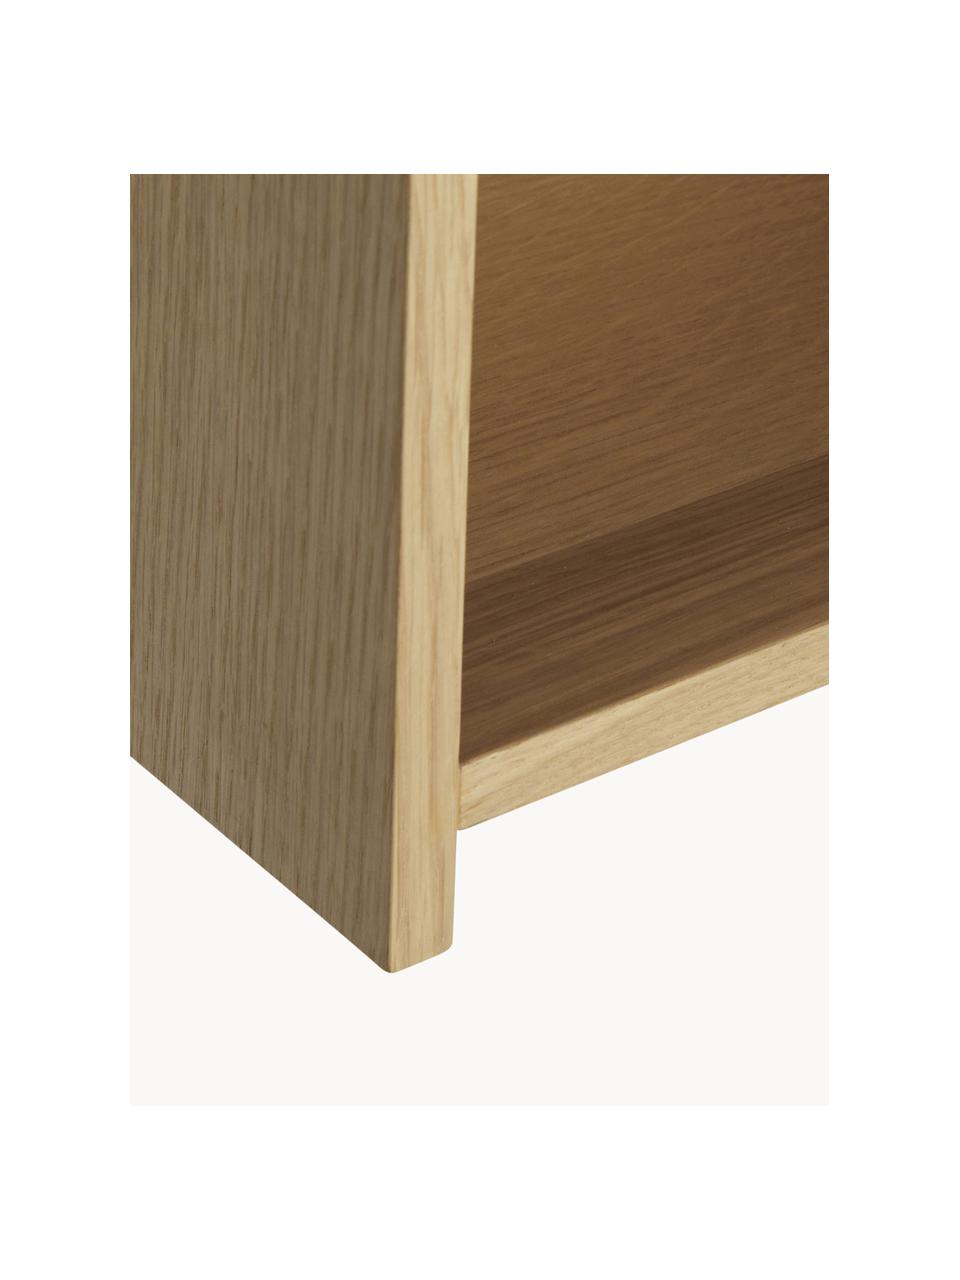 Holz-Wandregal Focal, Eichenholzfurnier

Dieses Produkt wird aus nachhaltig gewonnenem, FSC®-zertifiziertem Holz gefertigt., Holz, B 80 x H 23 cm